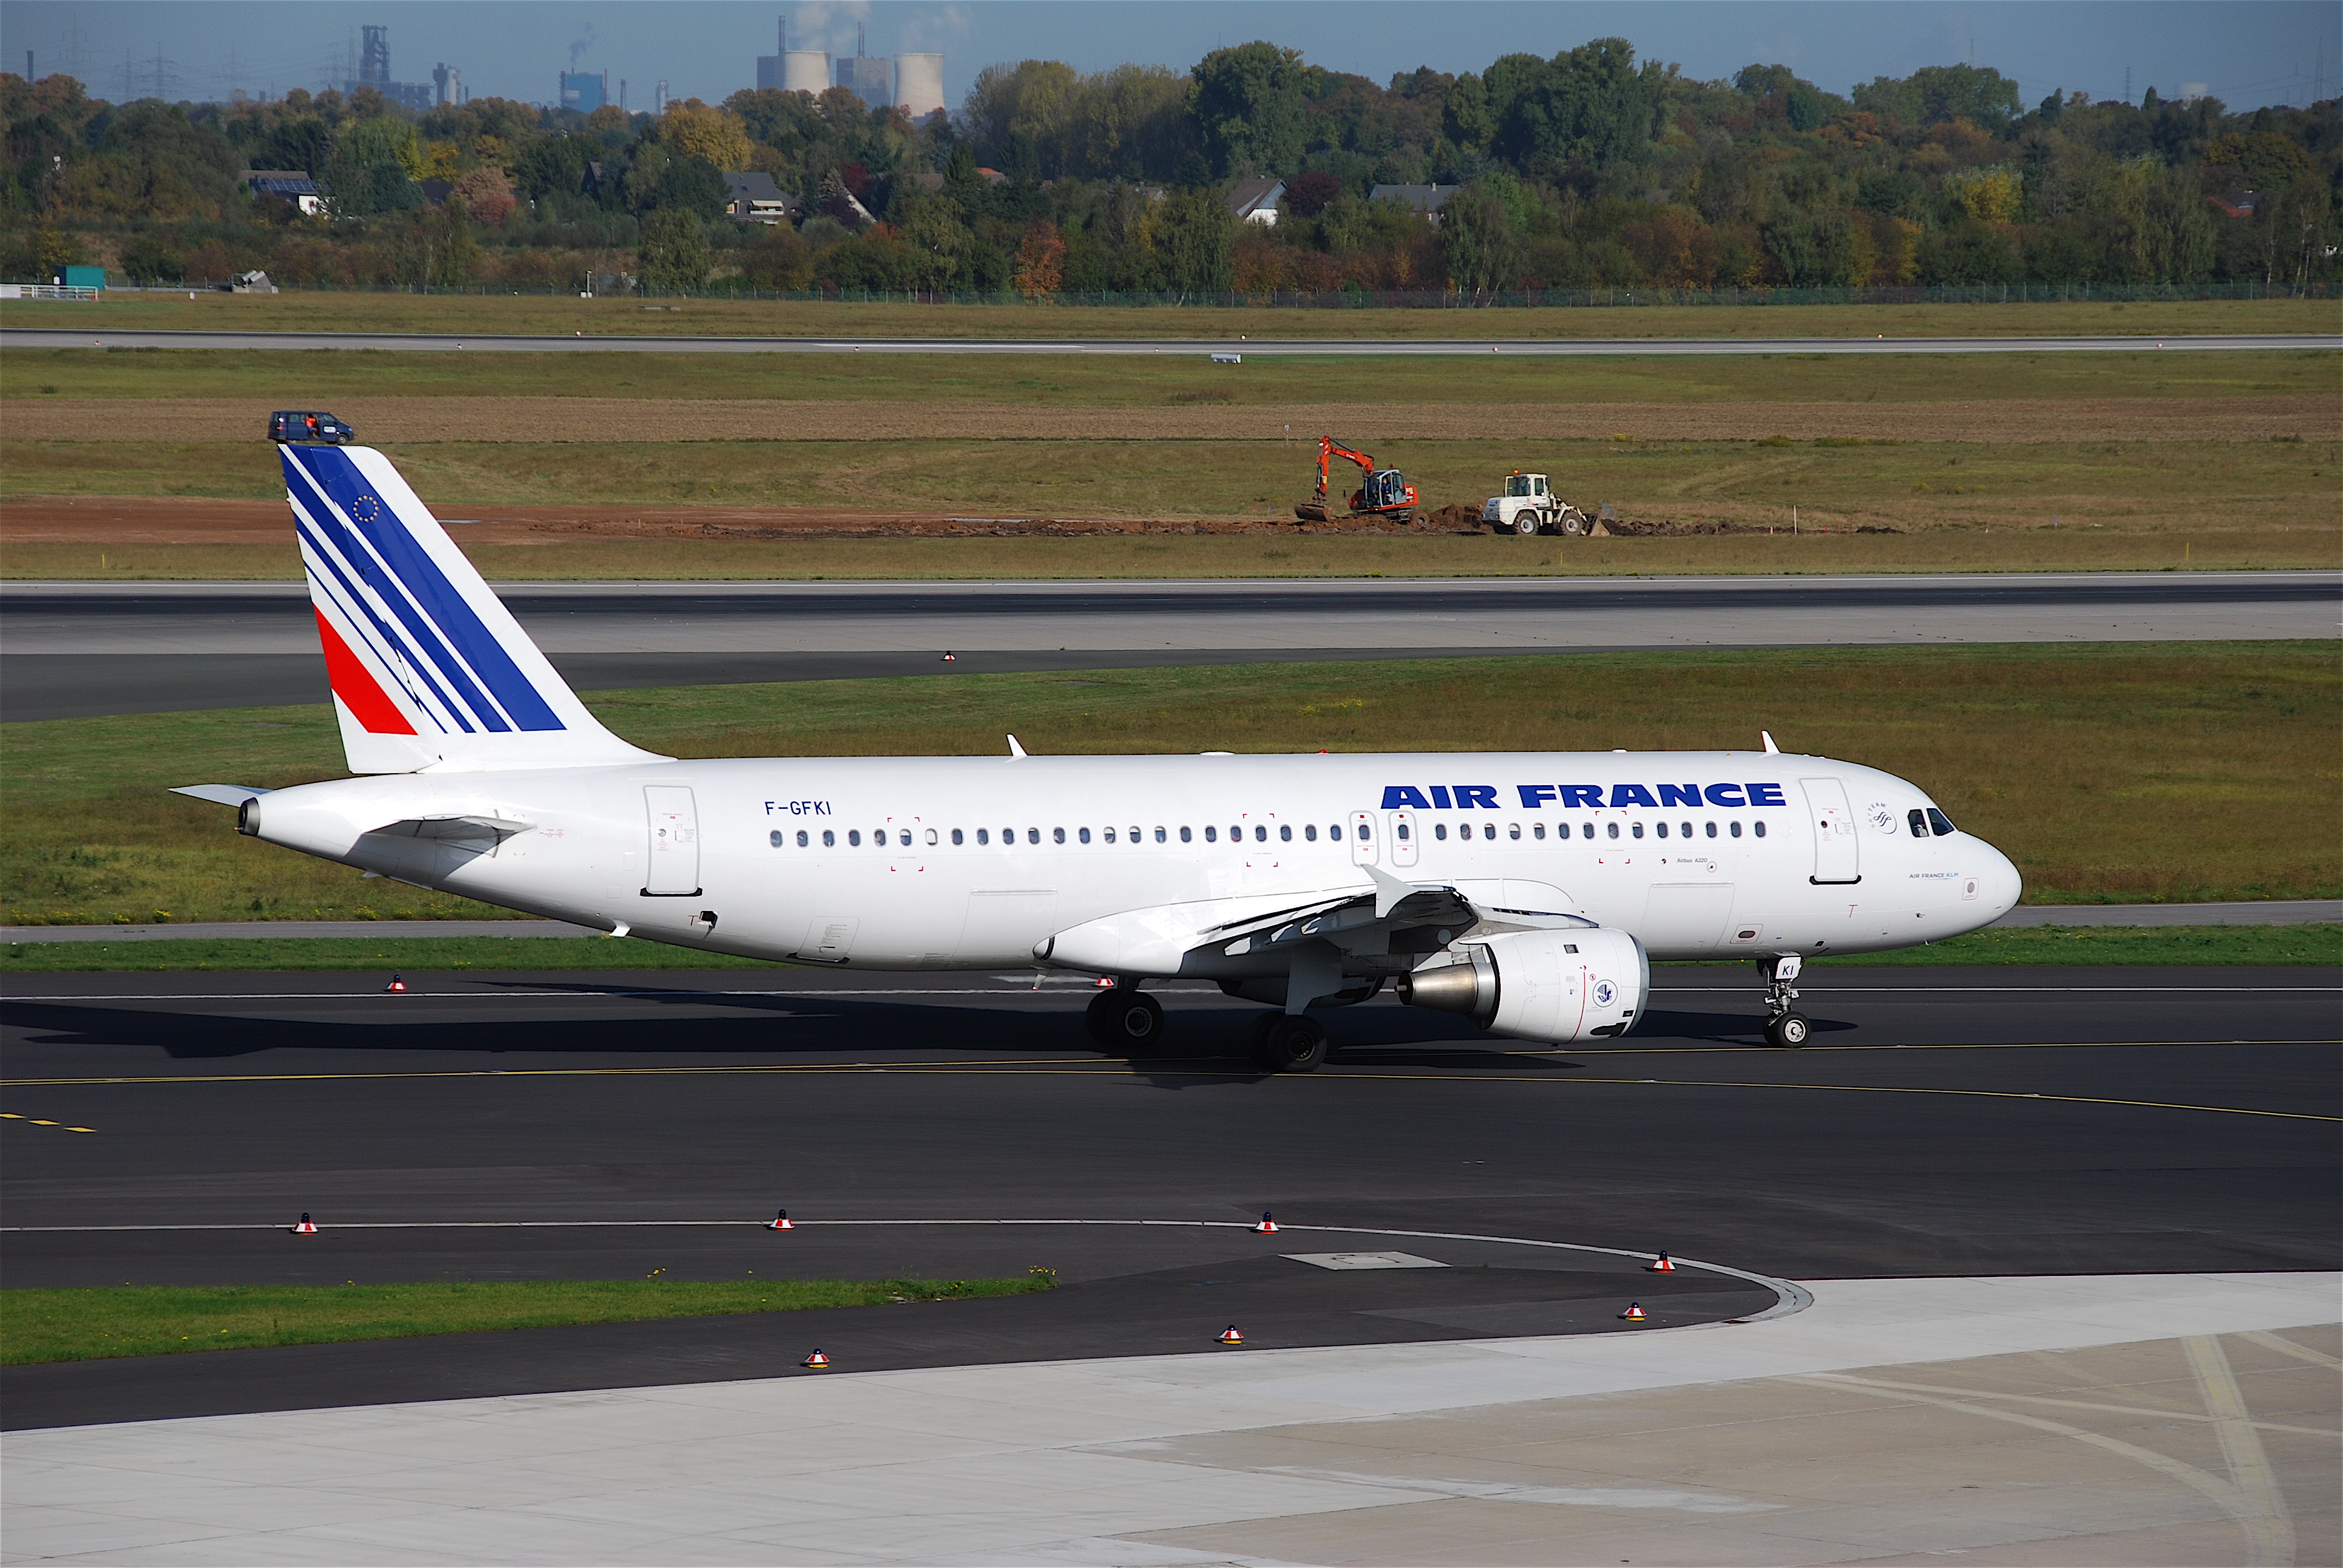 Air France Airbus A320-211, F-GFKI@DUS,13.10.2009-558ge - Flickr - Aero Icarus